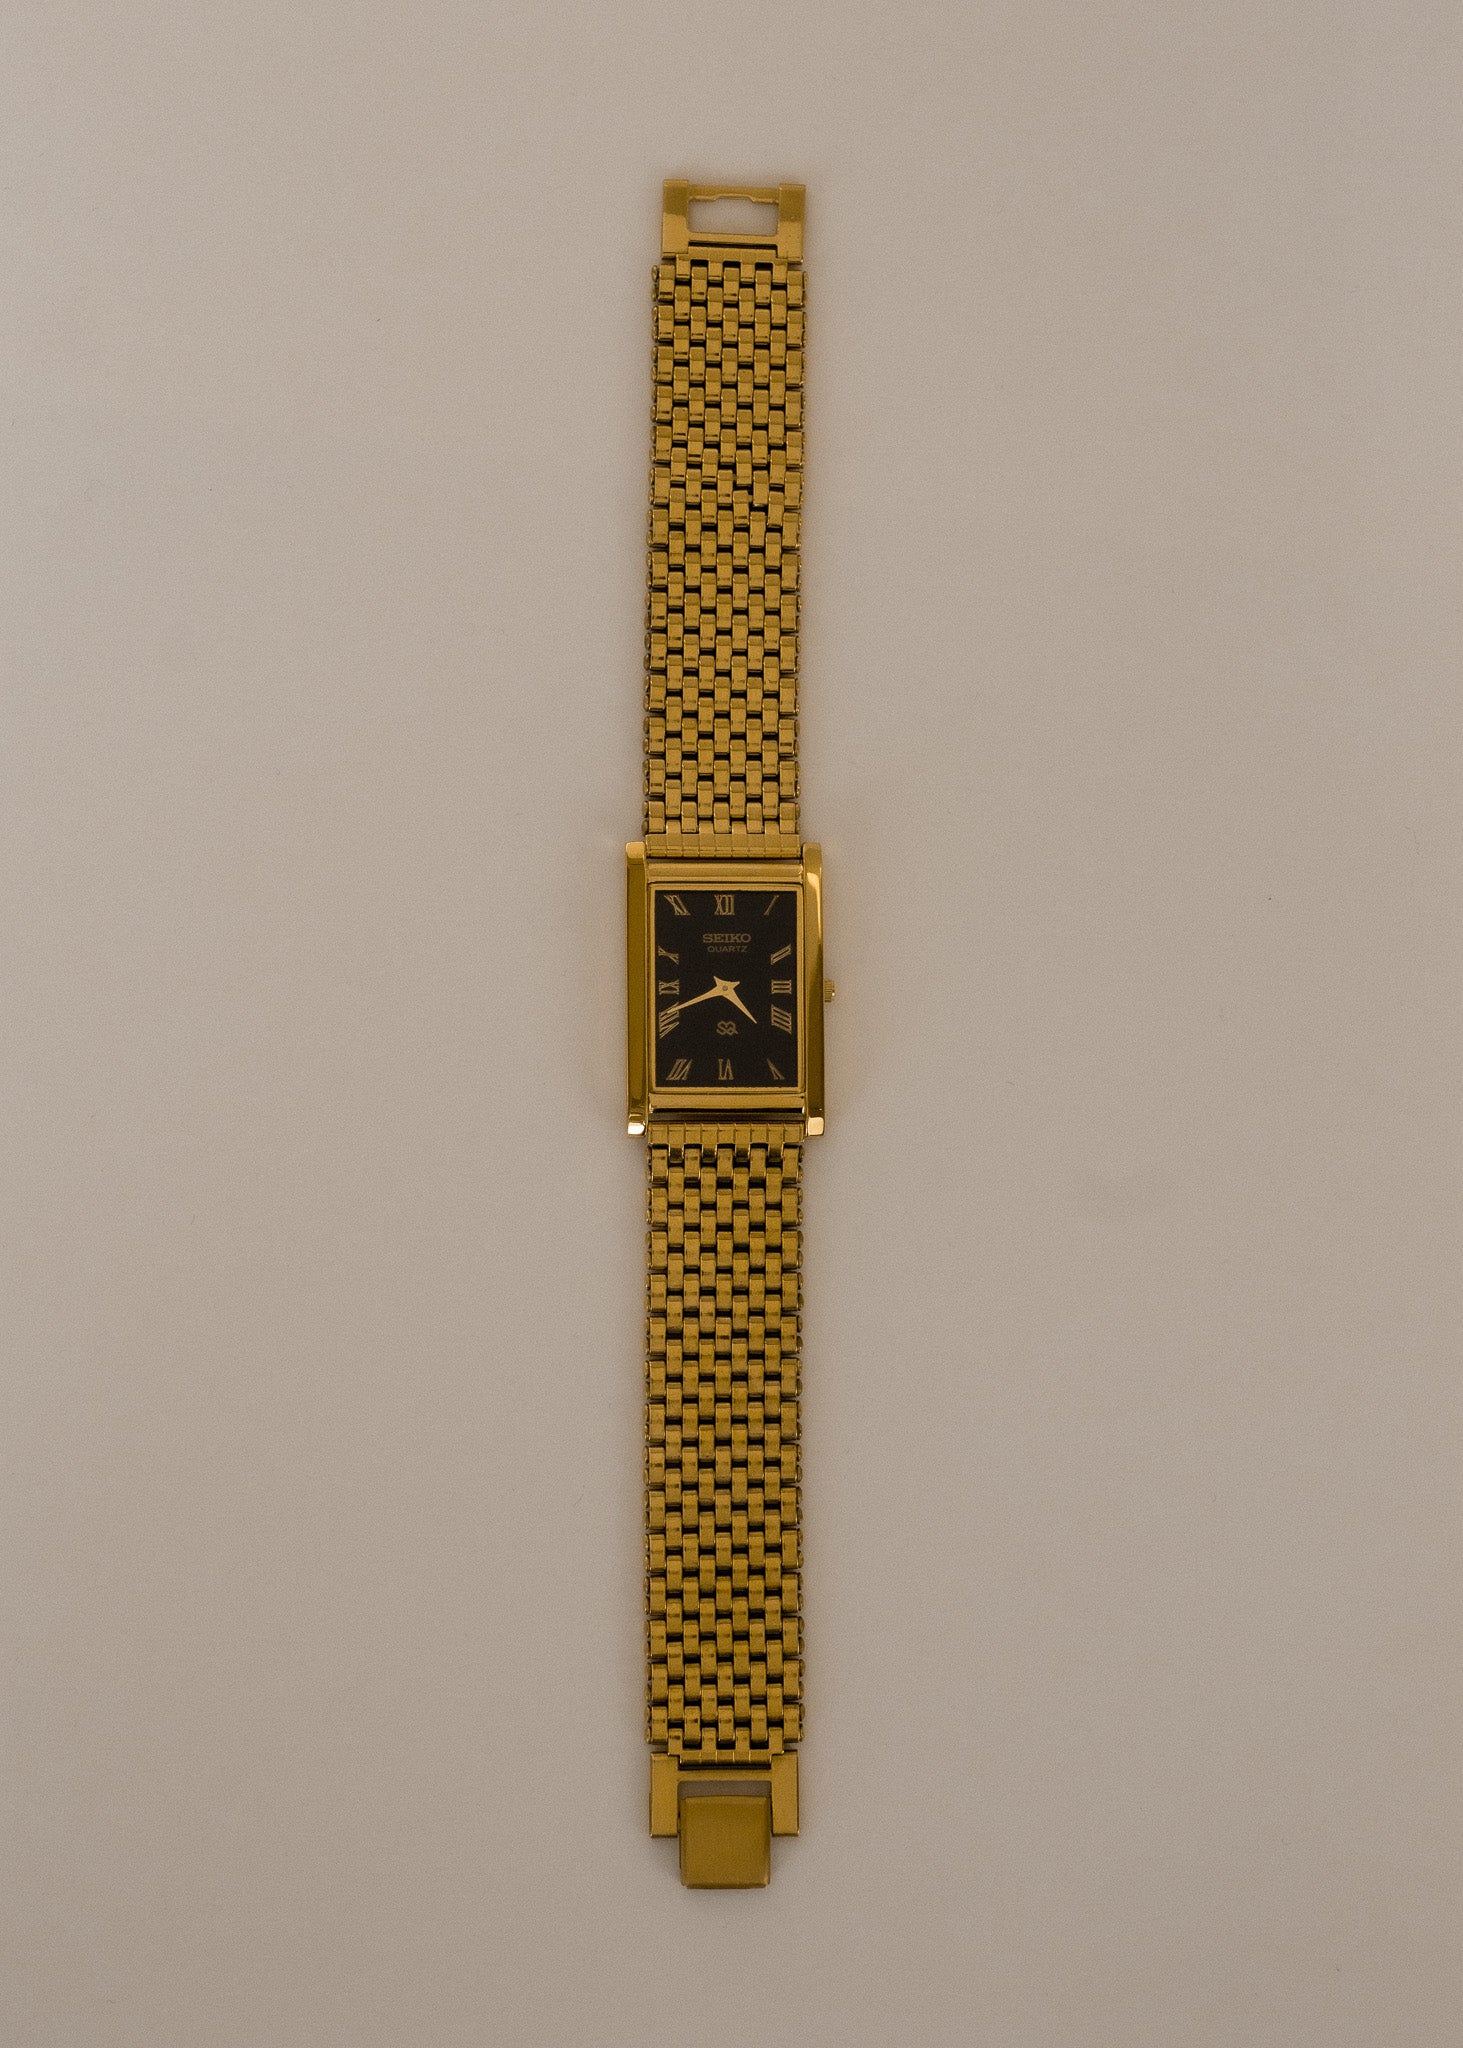 Vintage Seiko Watch Gold